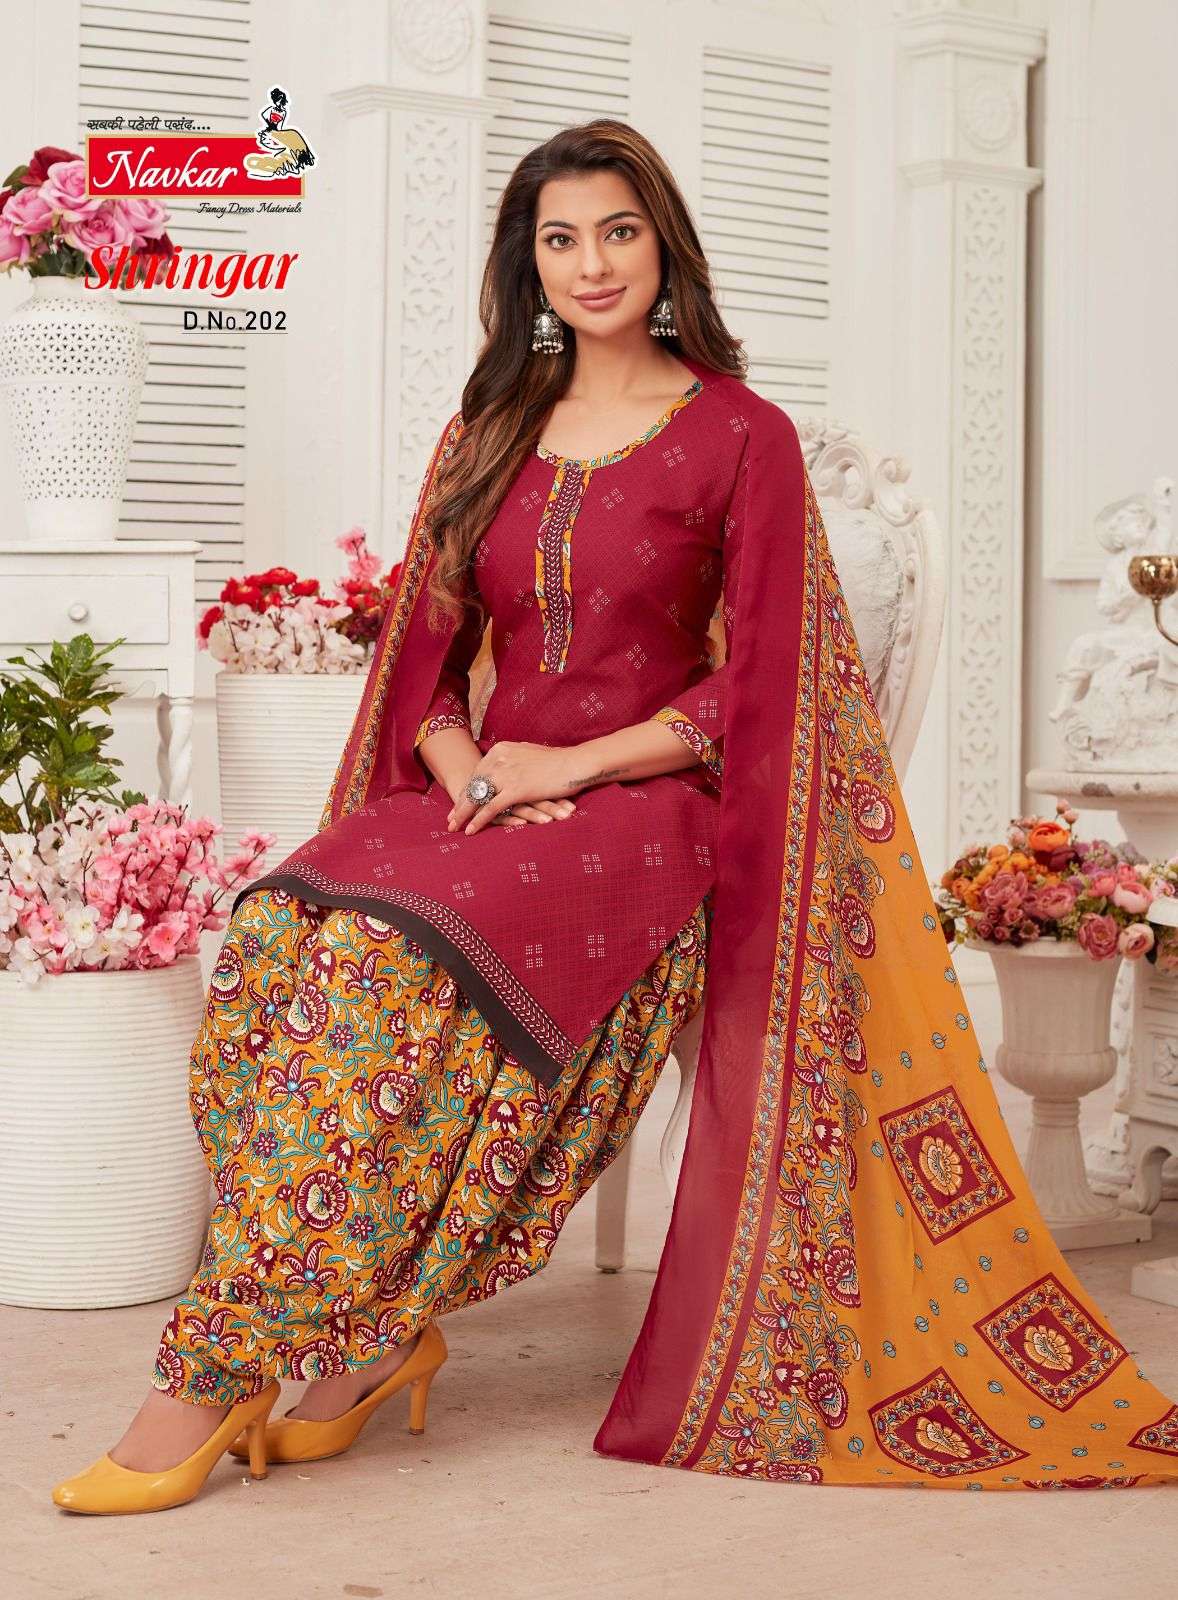 navkar shringar vol-2 201-216 series trendy designer salwar suits catalogue online supplier surat